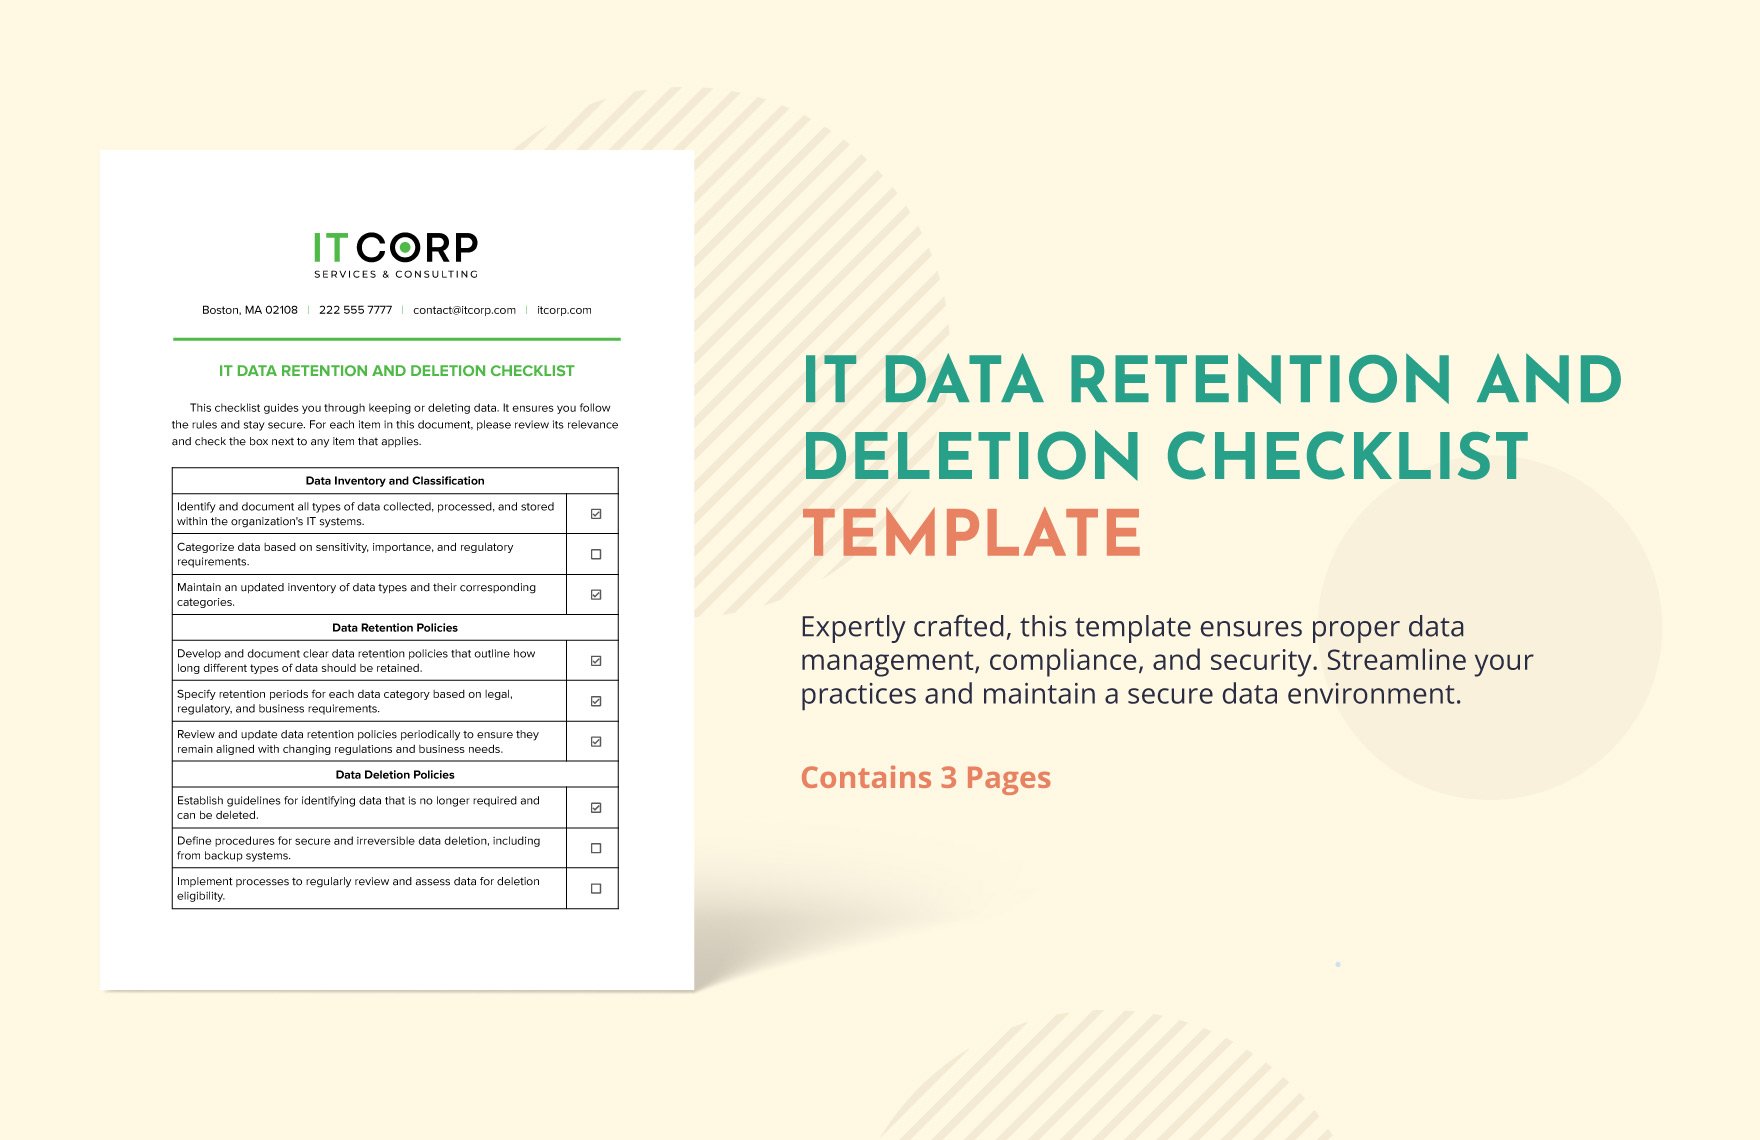 IT Data Retention and Deletion Checklist Template